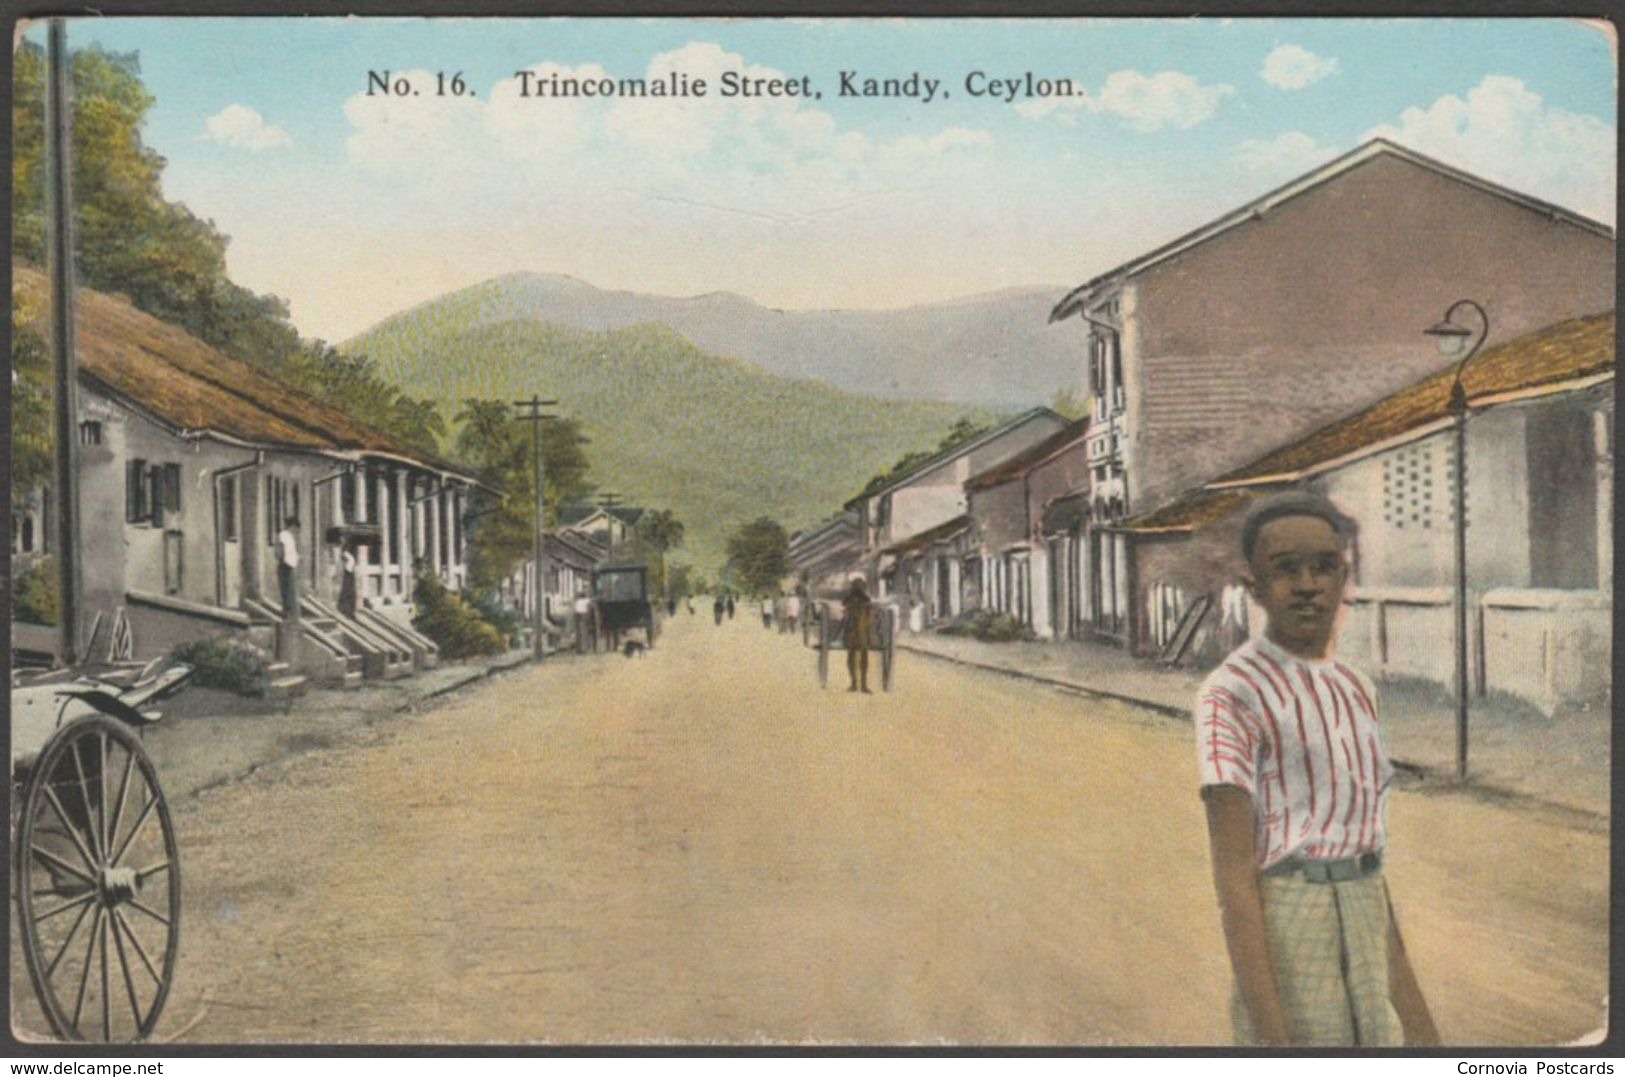 Trincomalie Street, Kandy, Ceylon, C.1920 - Coop Ltd Postcard - Sri Lanka (Ceylon)